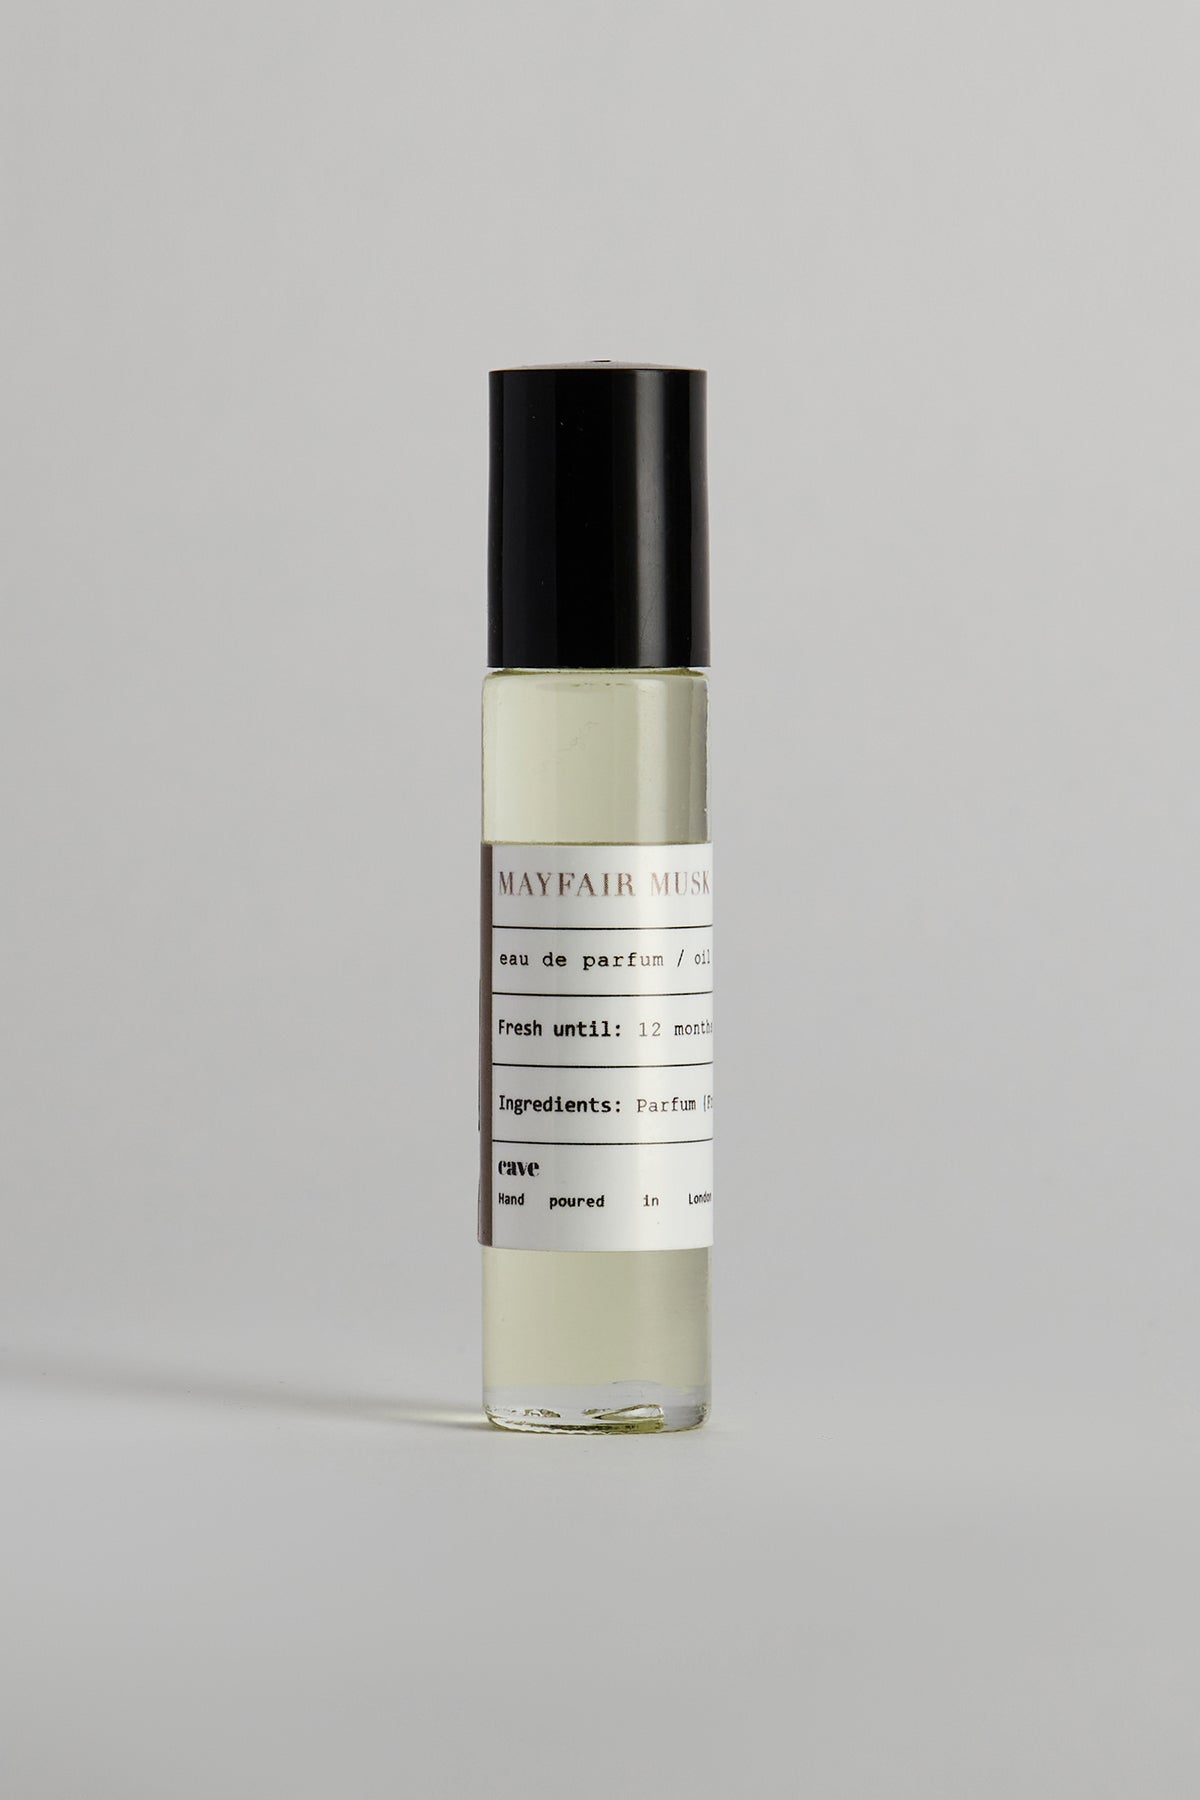 Mayfair Musk Oil Perfume - CAVE